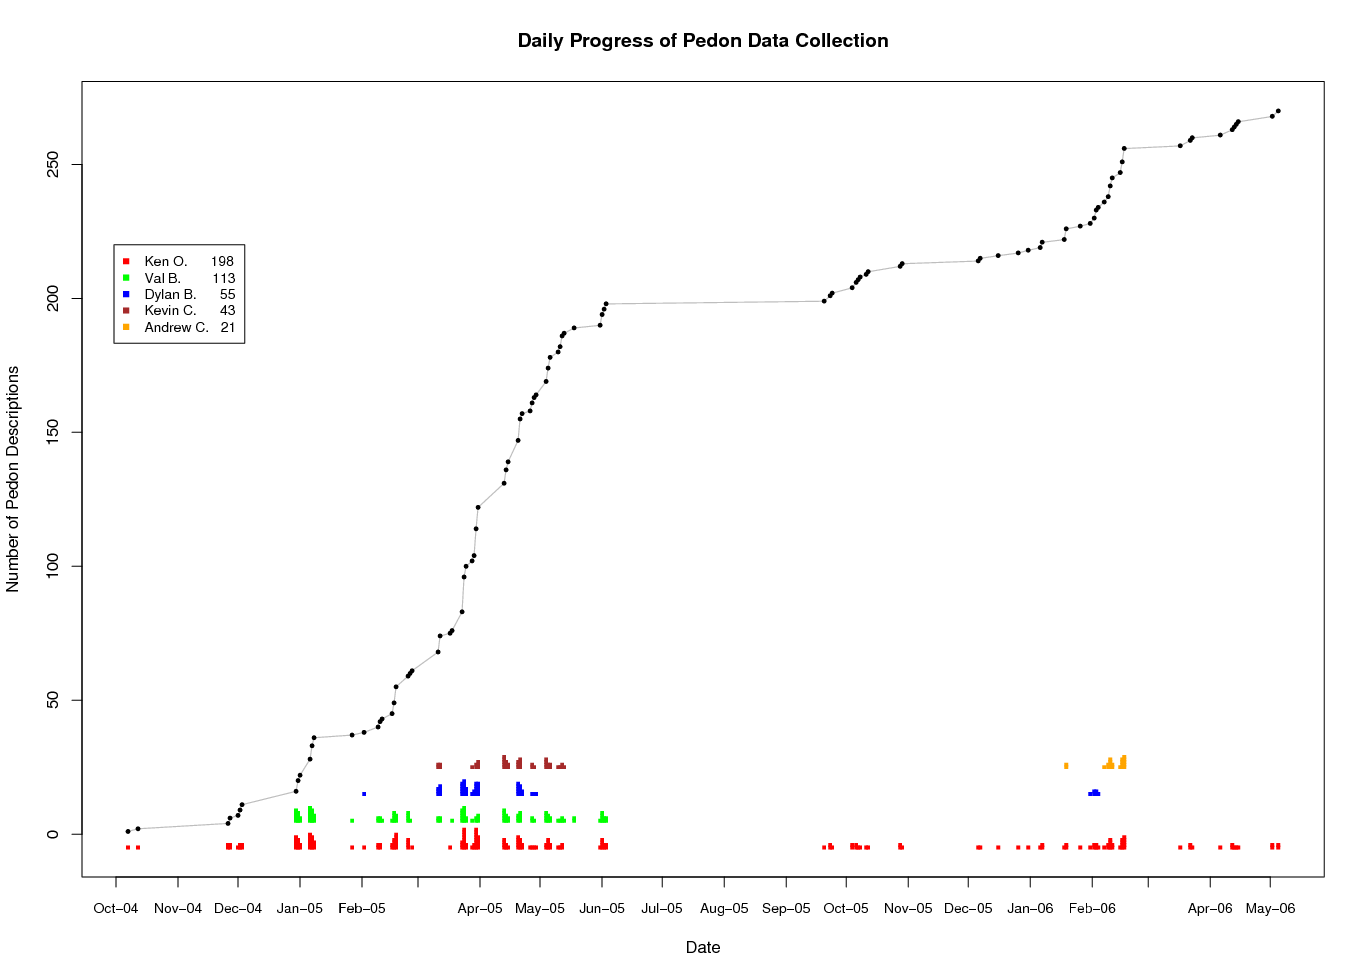 Pedon data collection: Simple graph summarizing the collection of pedon data at PINN.